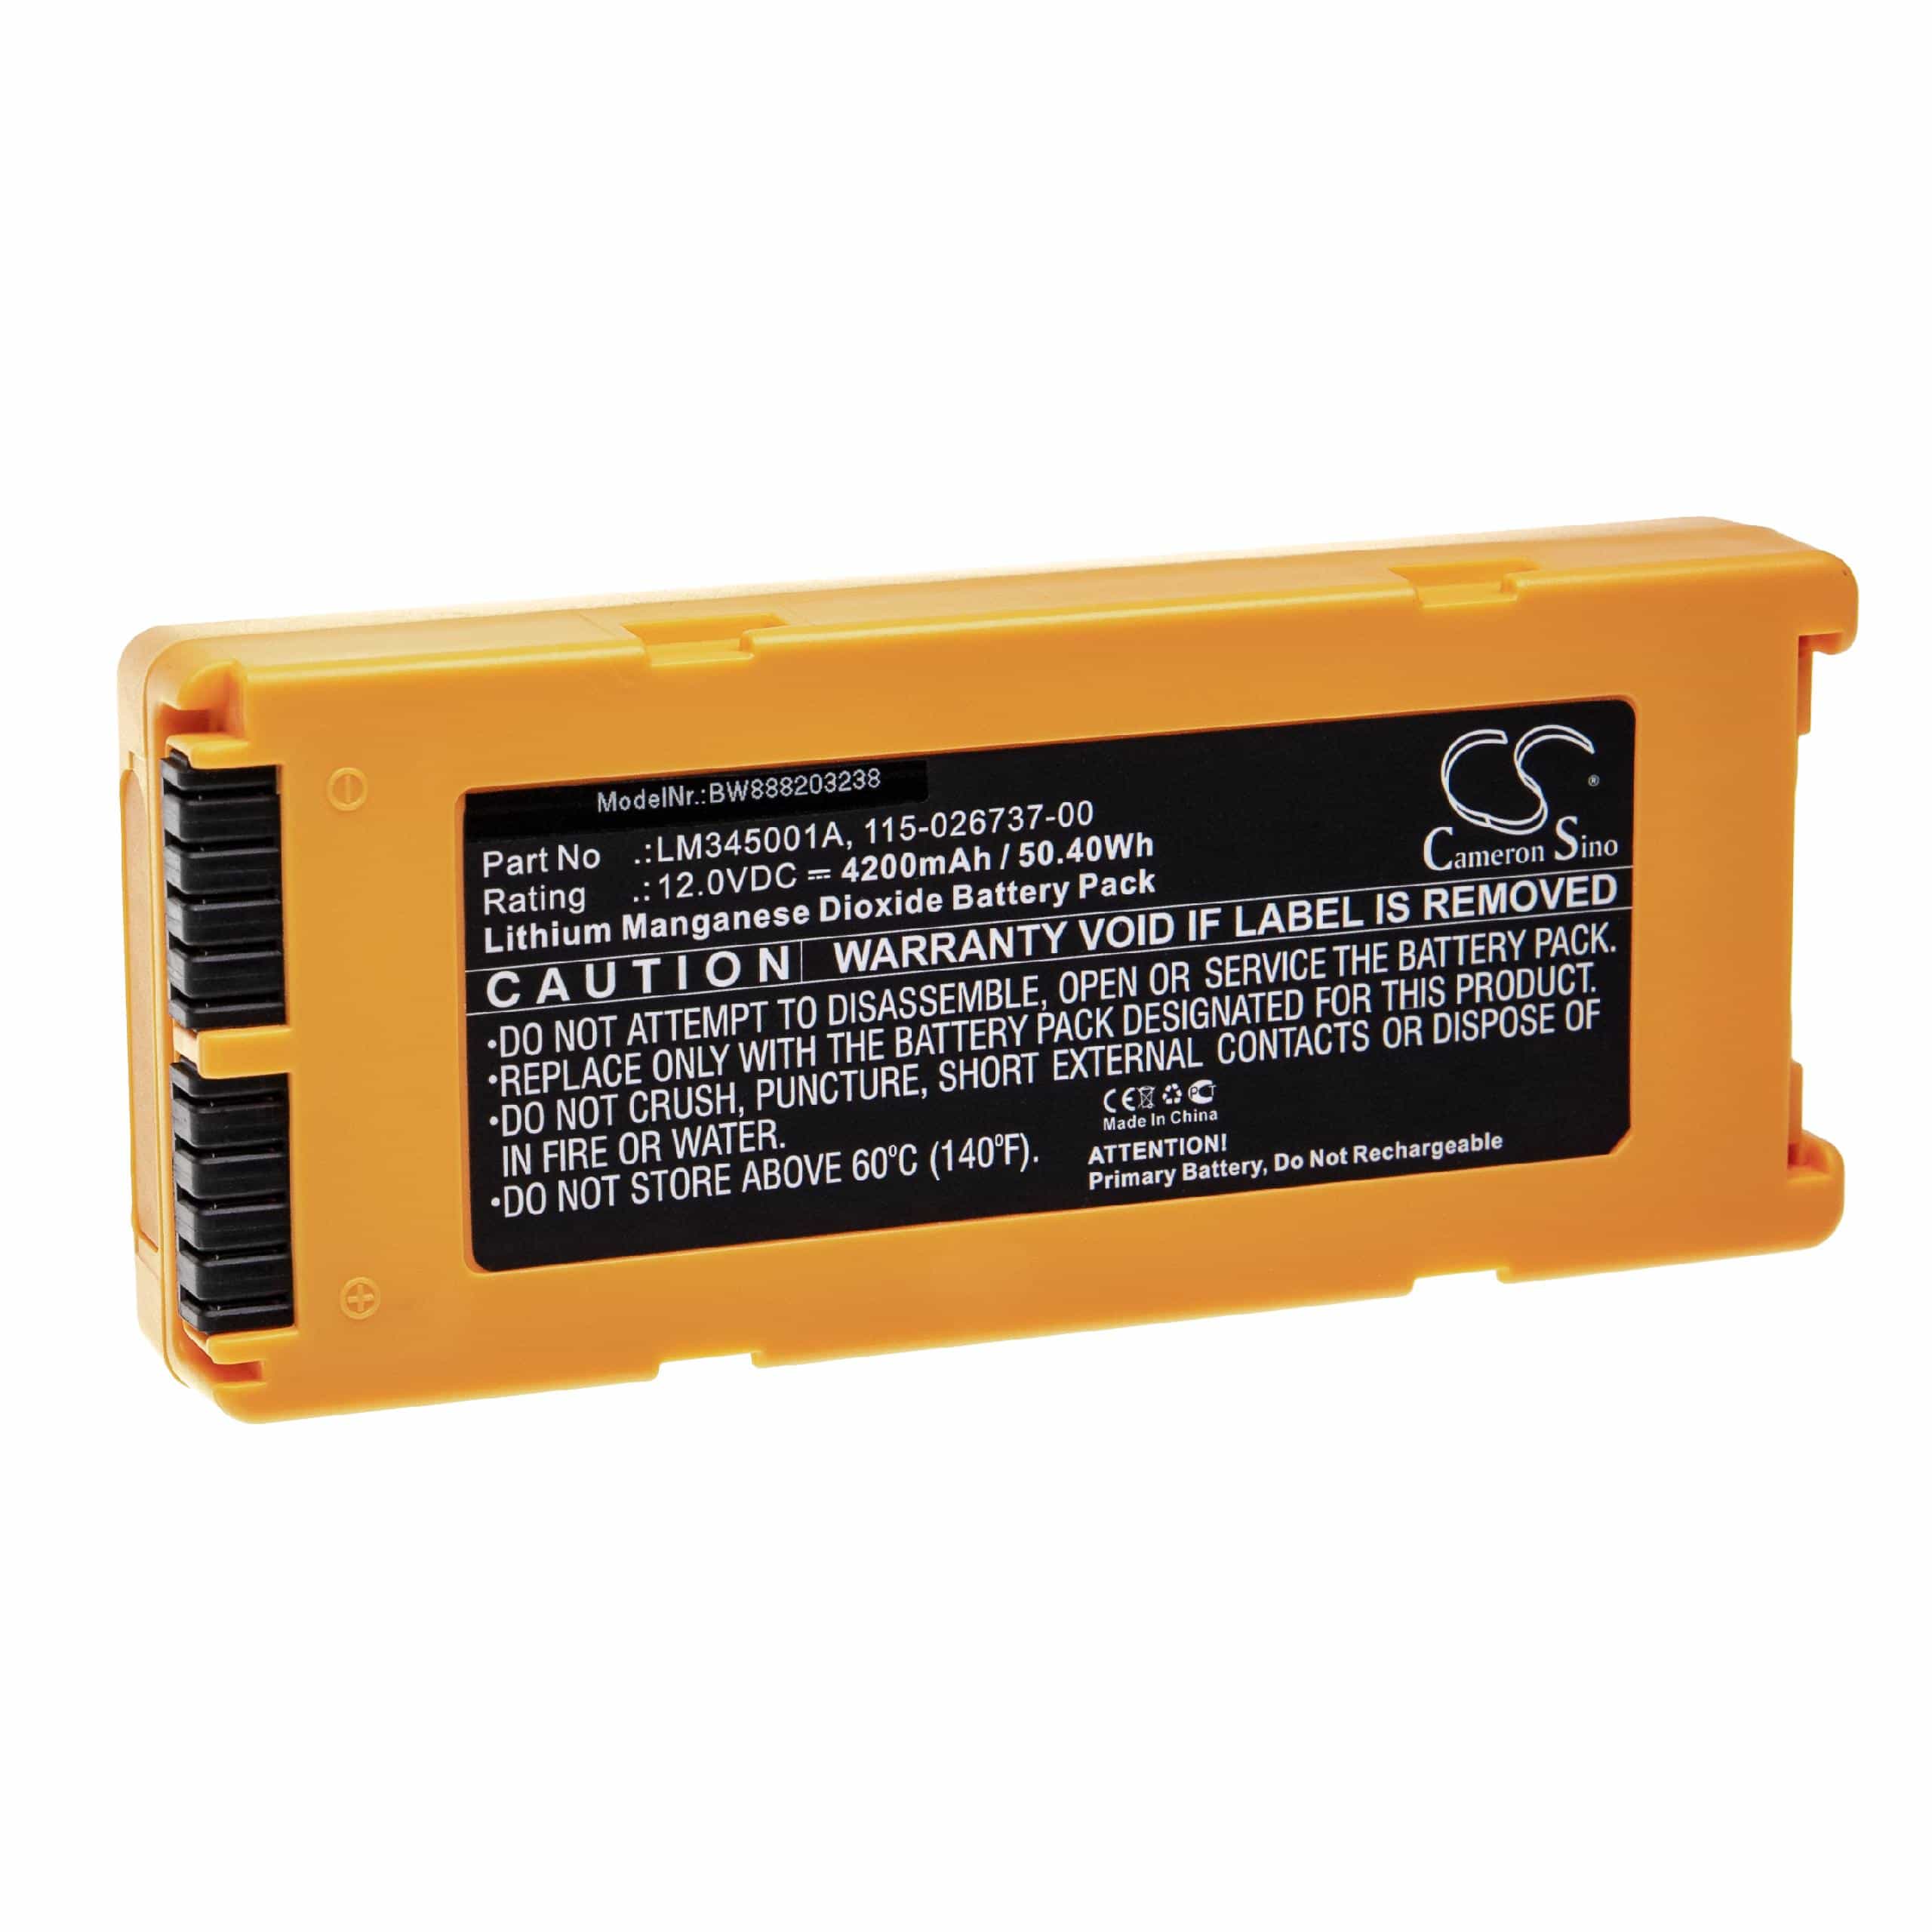 Batterie als Ersatz für Mindray 022-000124-00, LM345001A, LM34S001A, 115-026737-00 - 4200mAh 12V Li-MnO2